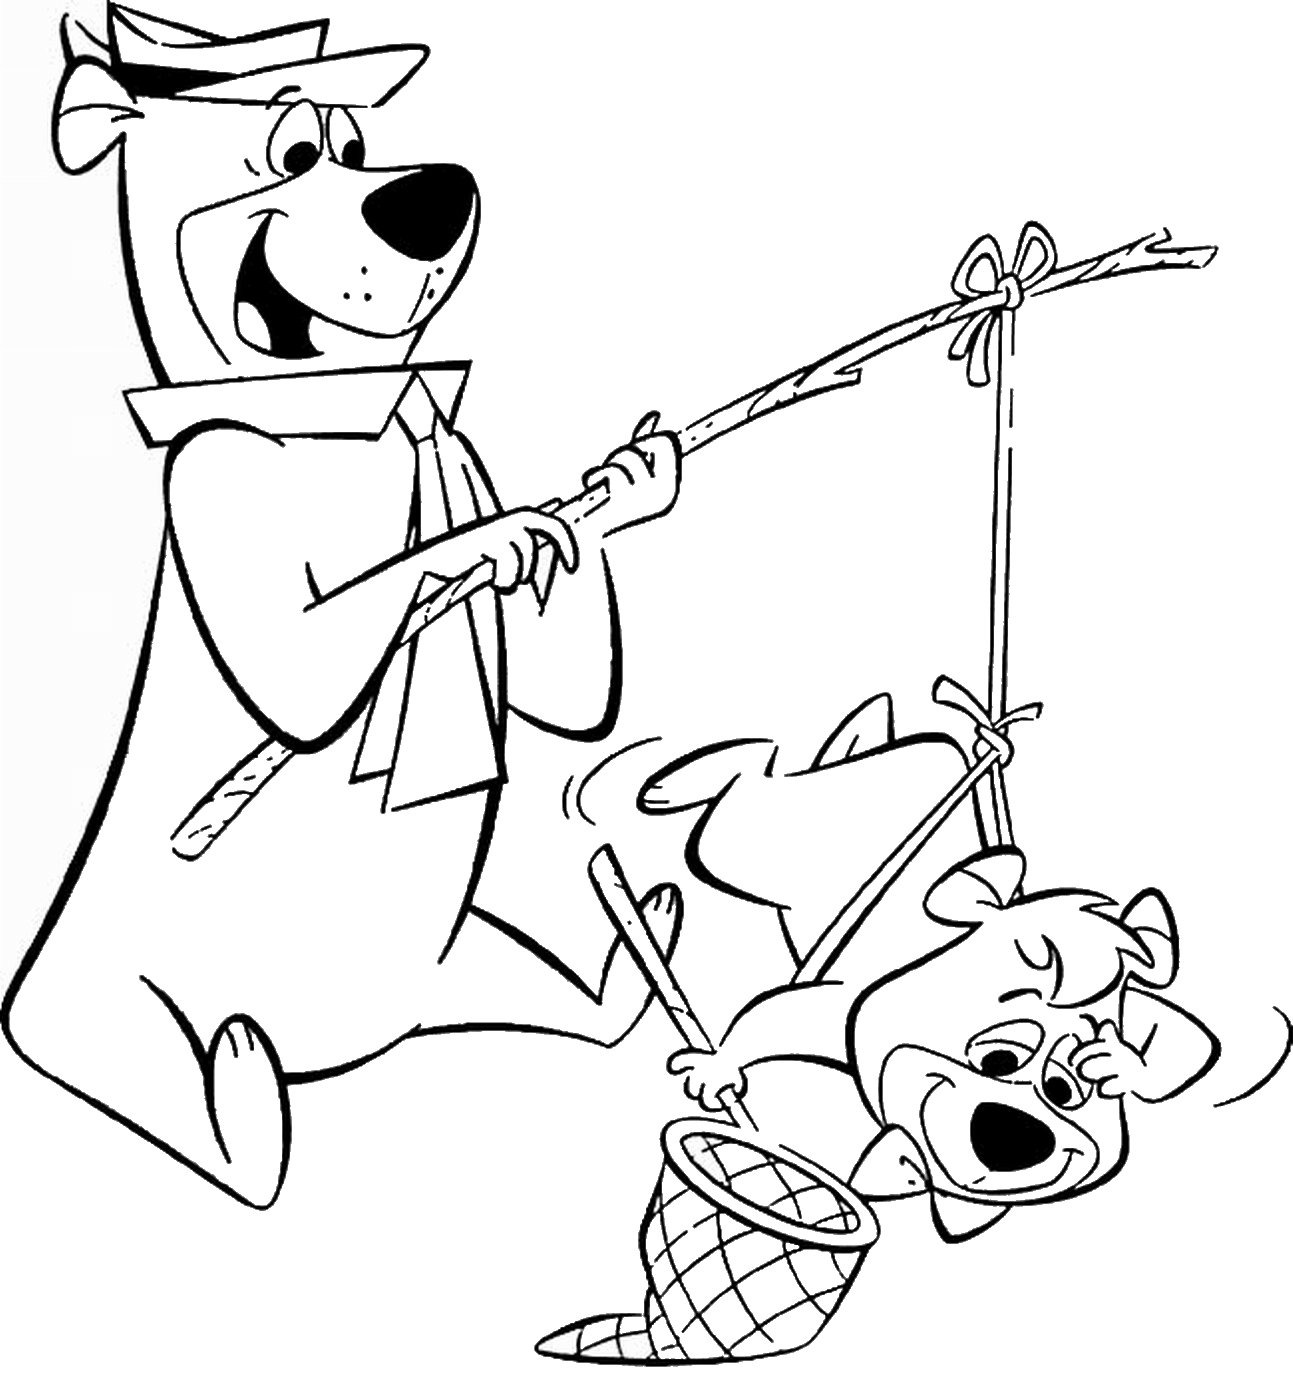 Yogi Bear Coloring Pages Cartoons yogi_bear_cl_34 Printable 2020 7278 Coloring4free